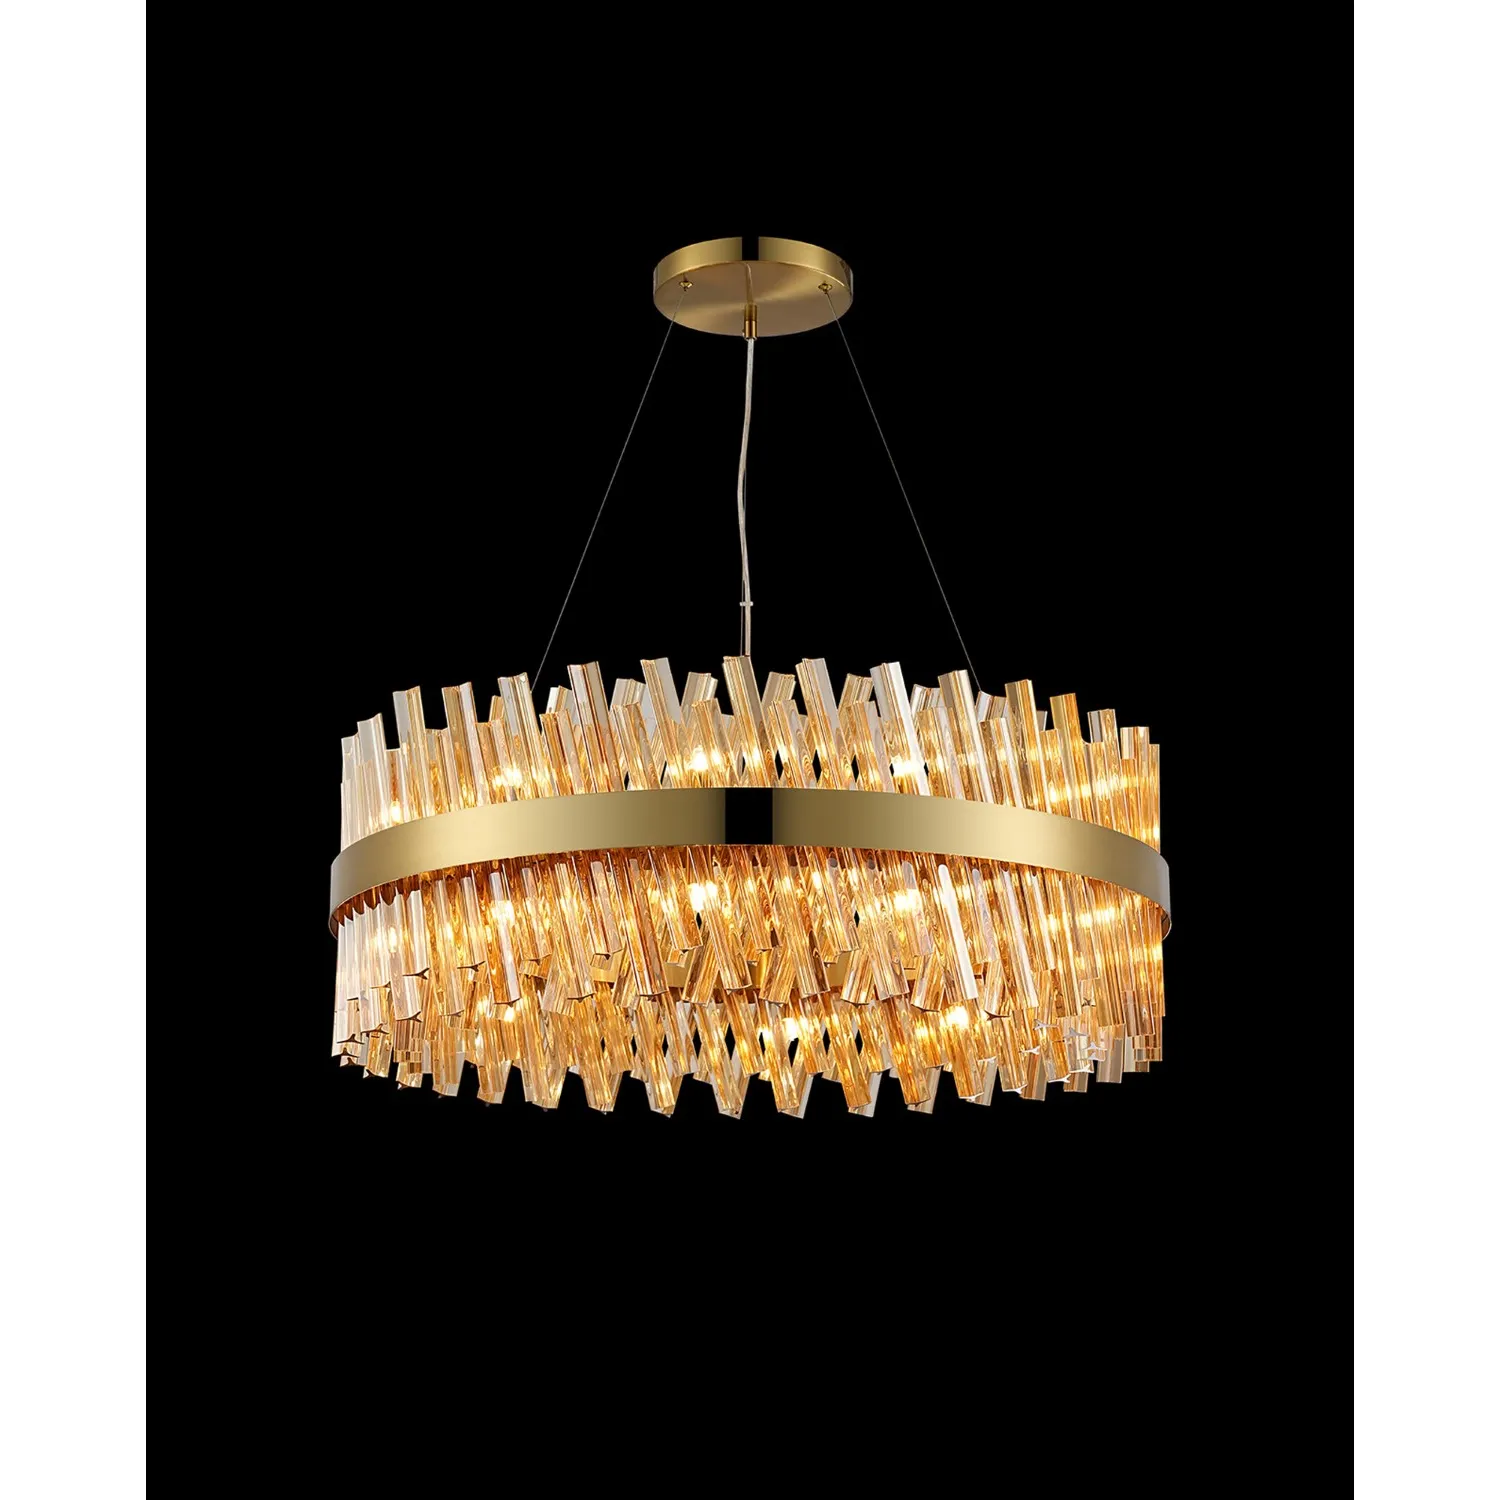 Brass Amber 80cm Round Pendant Light 24 G9 Lamp Sockets